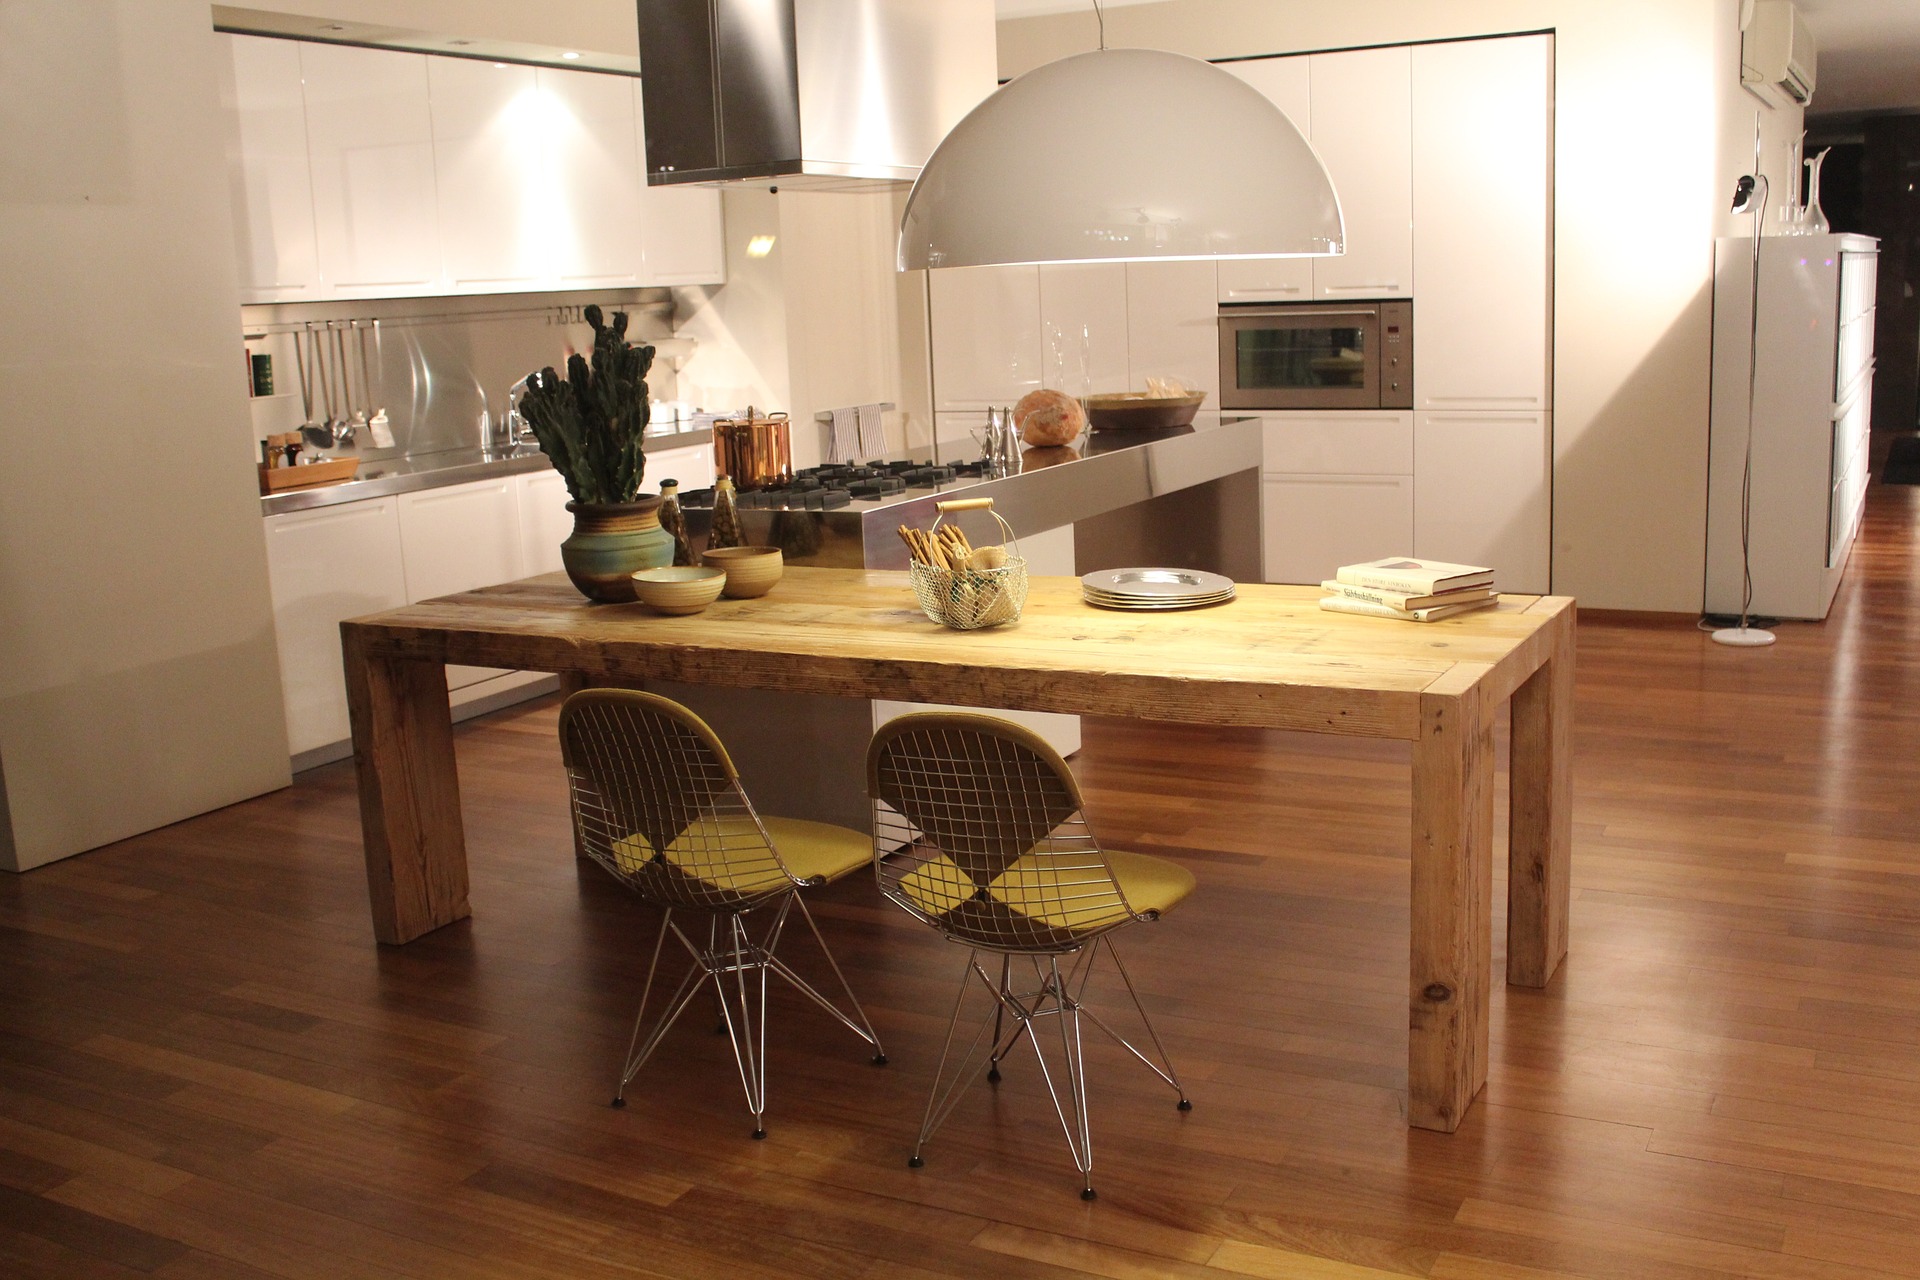 Refresh your kitchen with quartz countertops